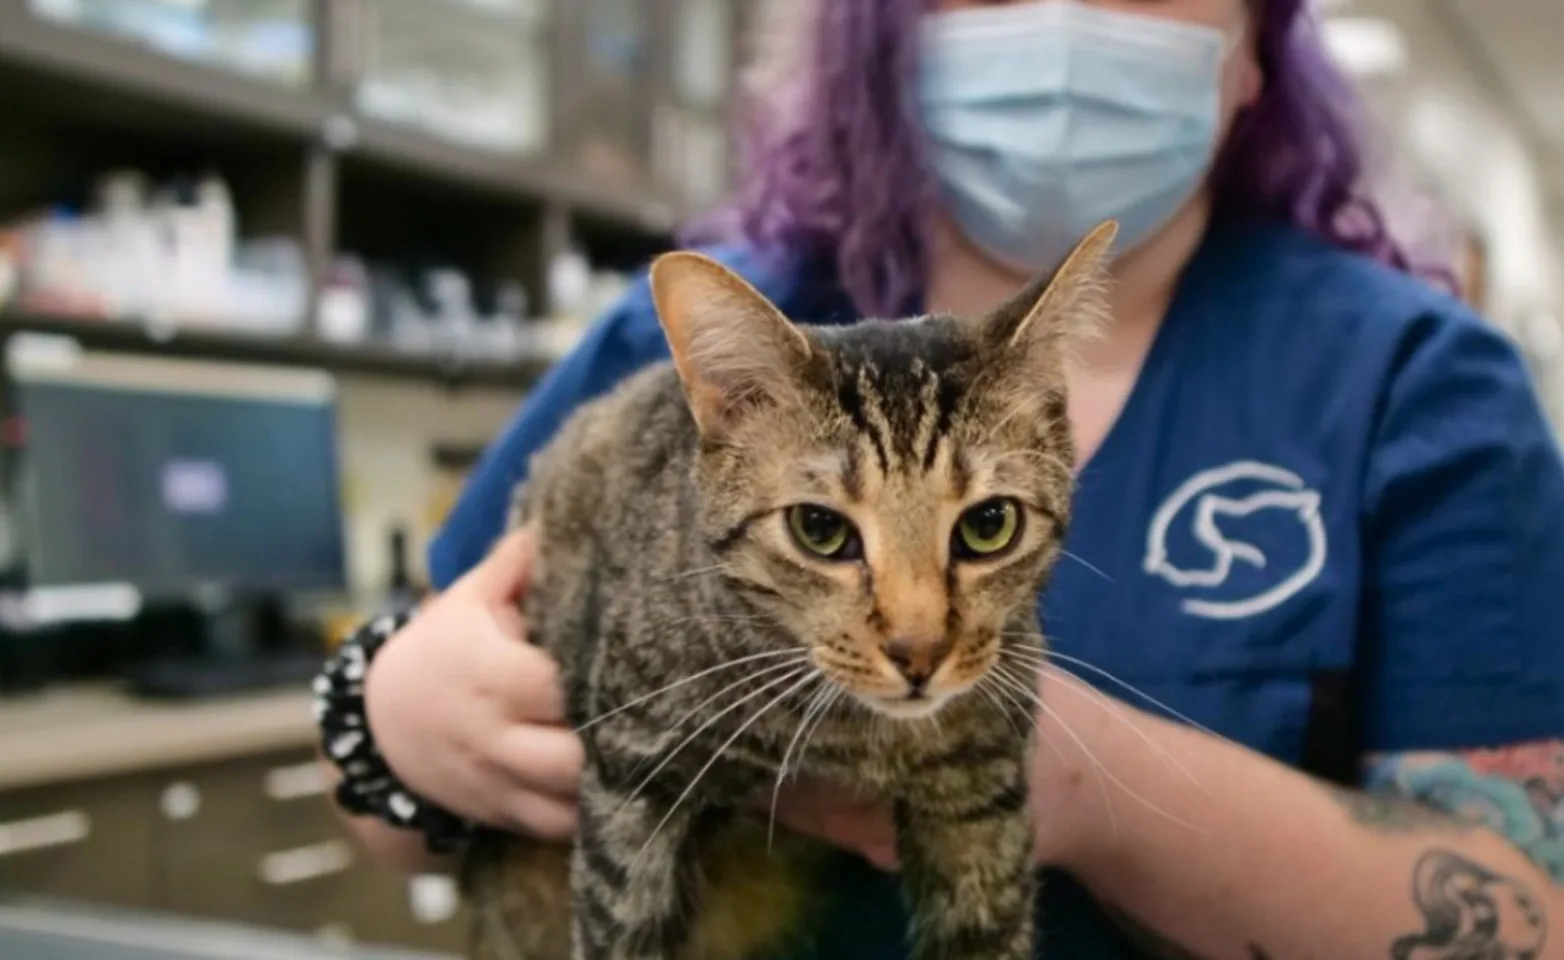 A Mountainside employee examining a tabby cat